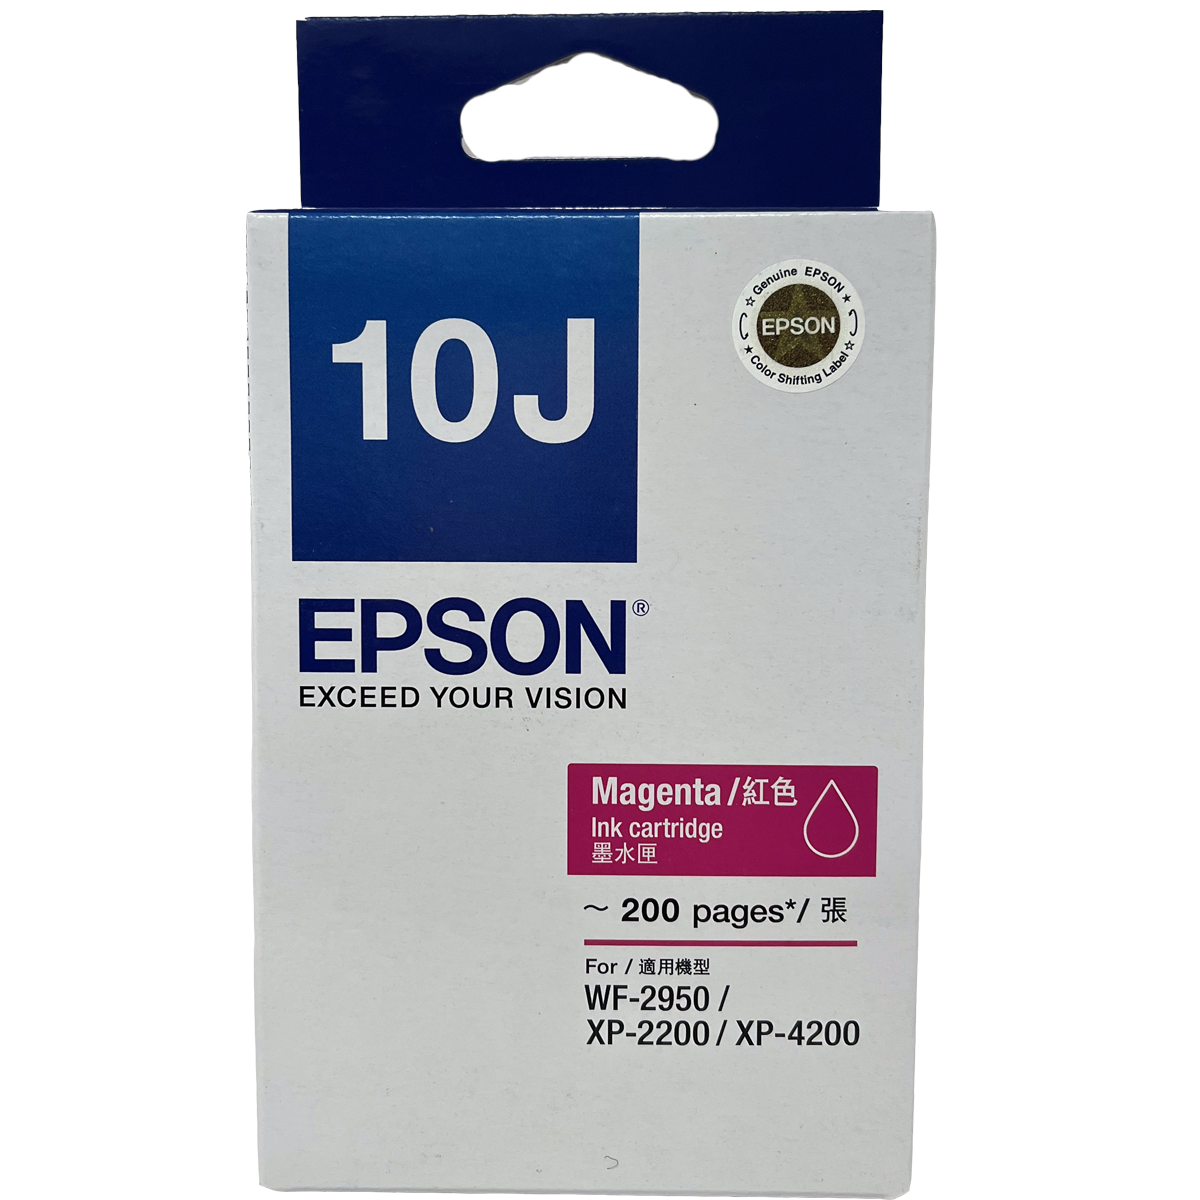 Epson 10J Magenta Ink Cartridge #C13T10J383